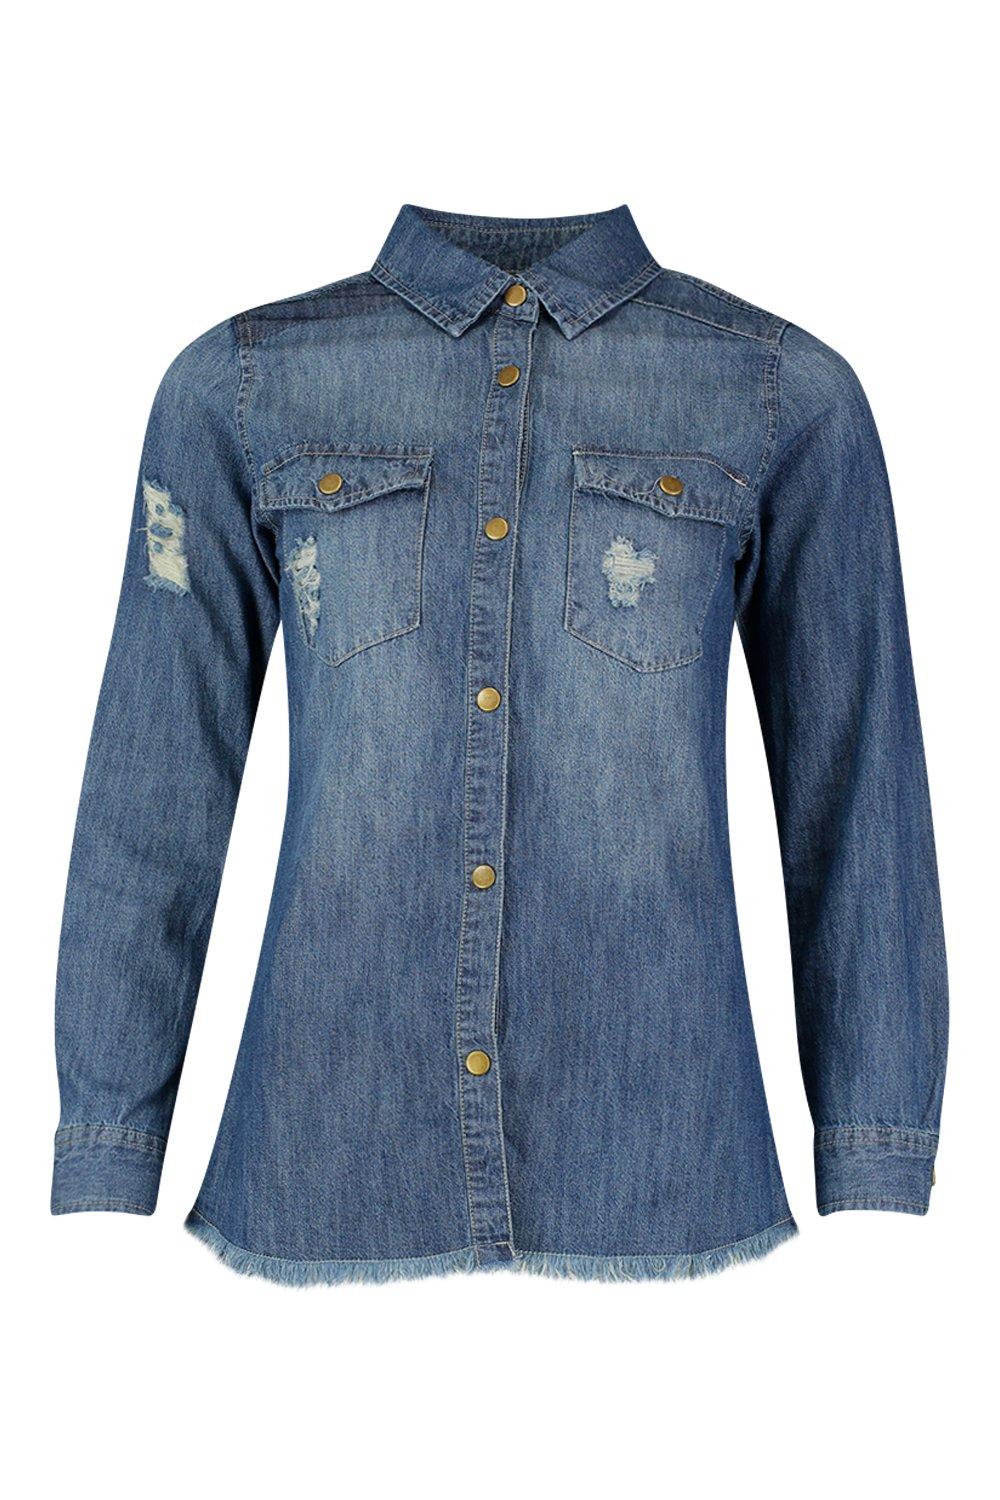 distressed jean shirt